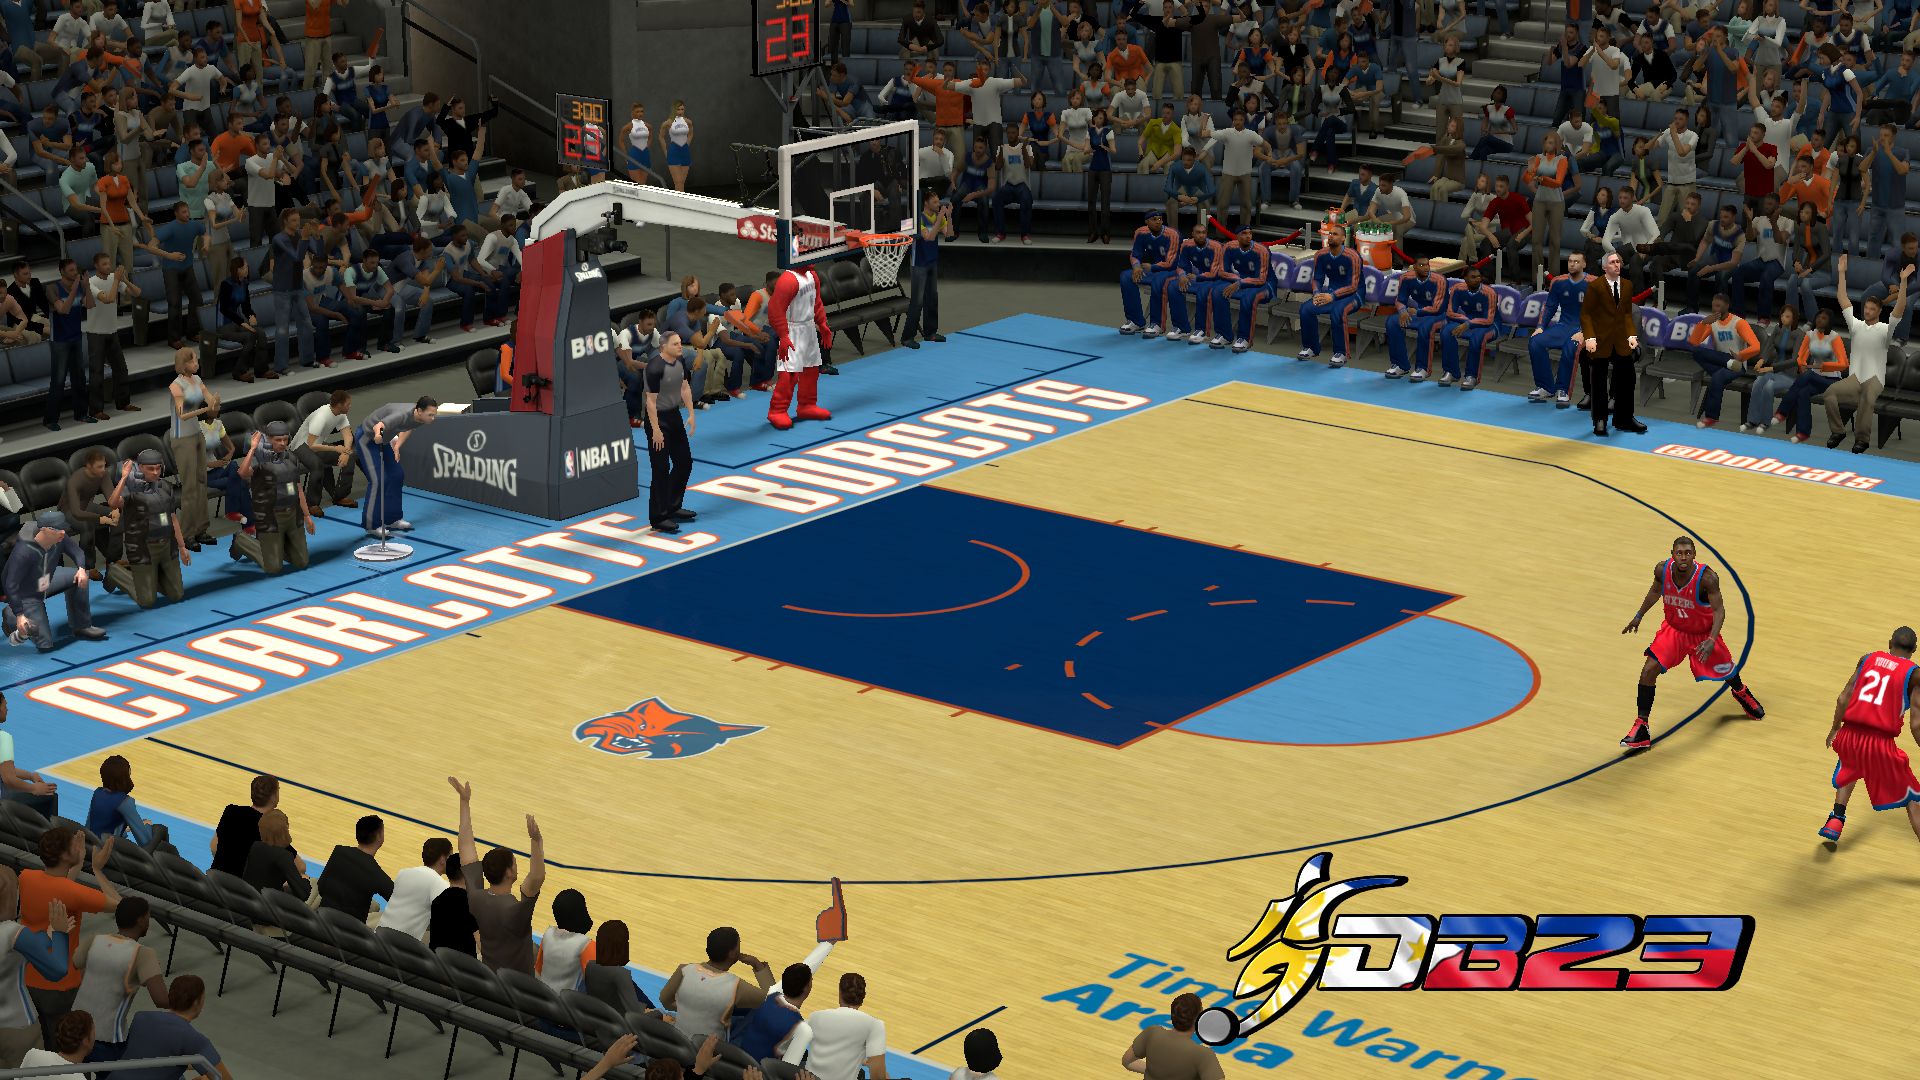 Charlotte Bobcats Jerseys - NBA 2K14 at ModdingWay